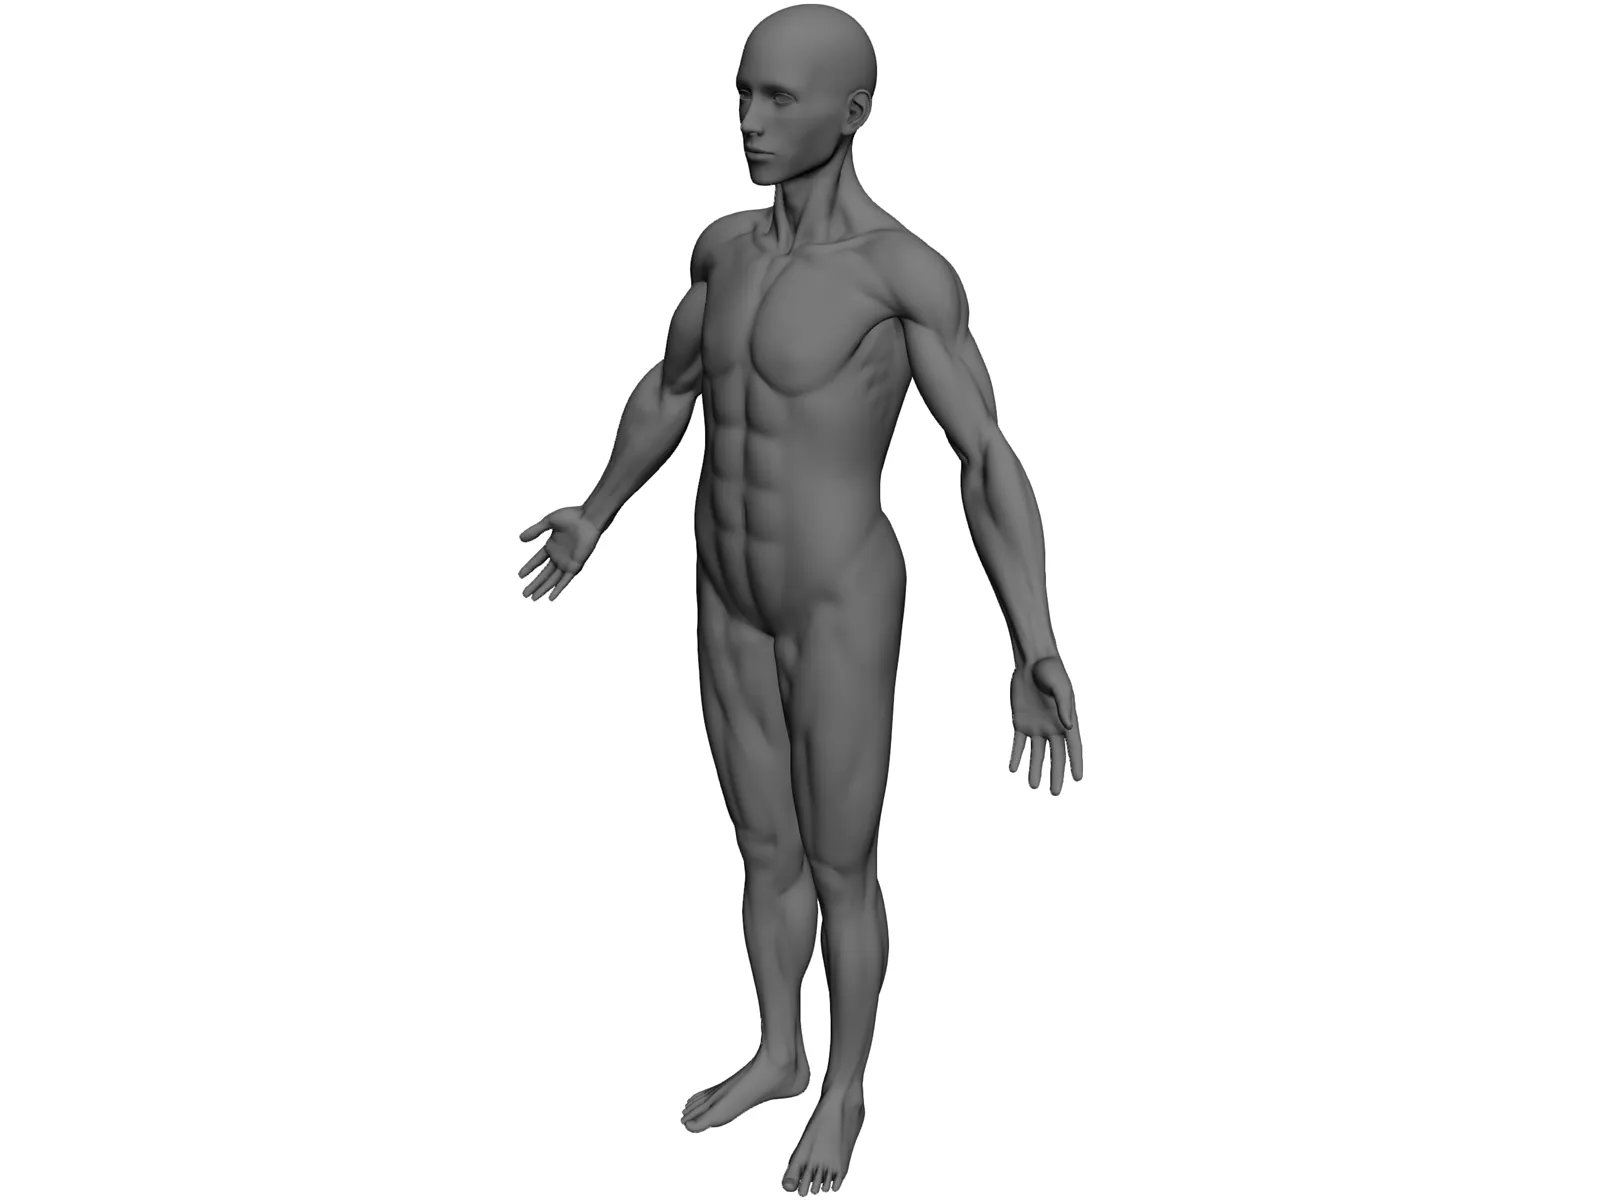 Full Human Anatomy for Simulation 3D Model